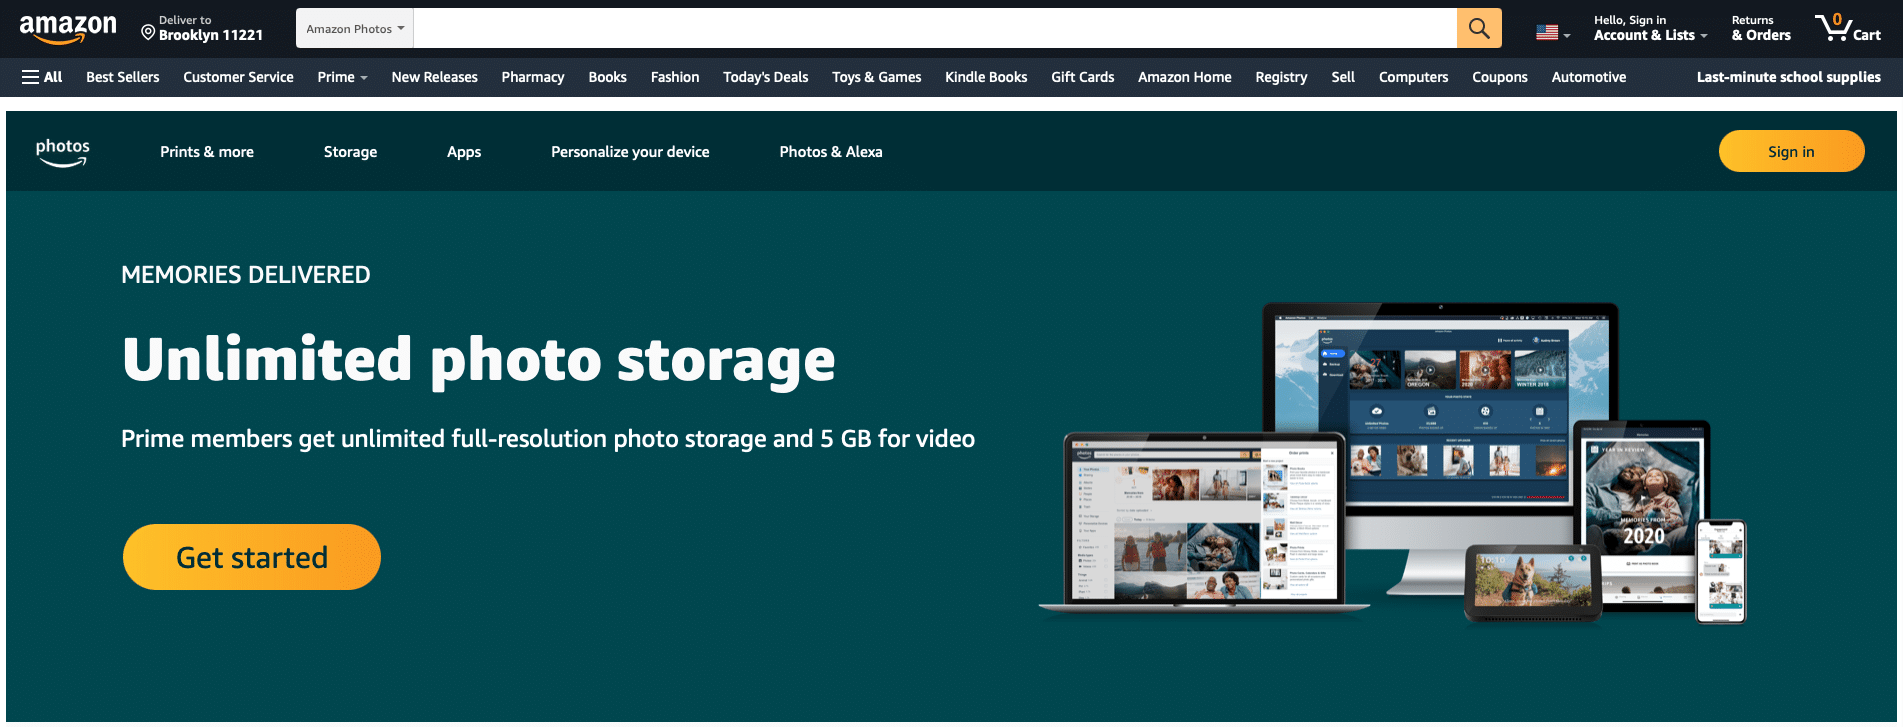 Amazon Photos screen shot - free with Prime membership